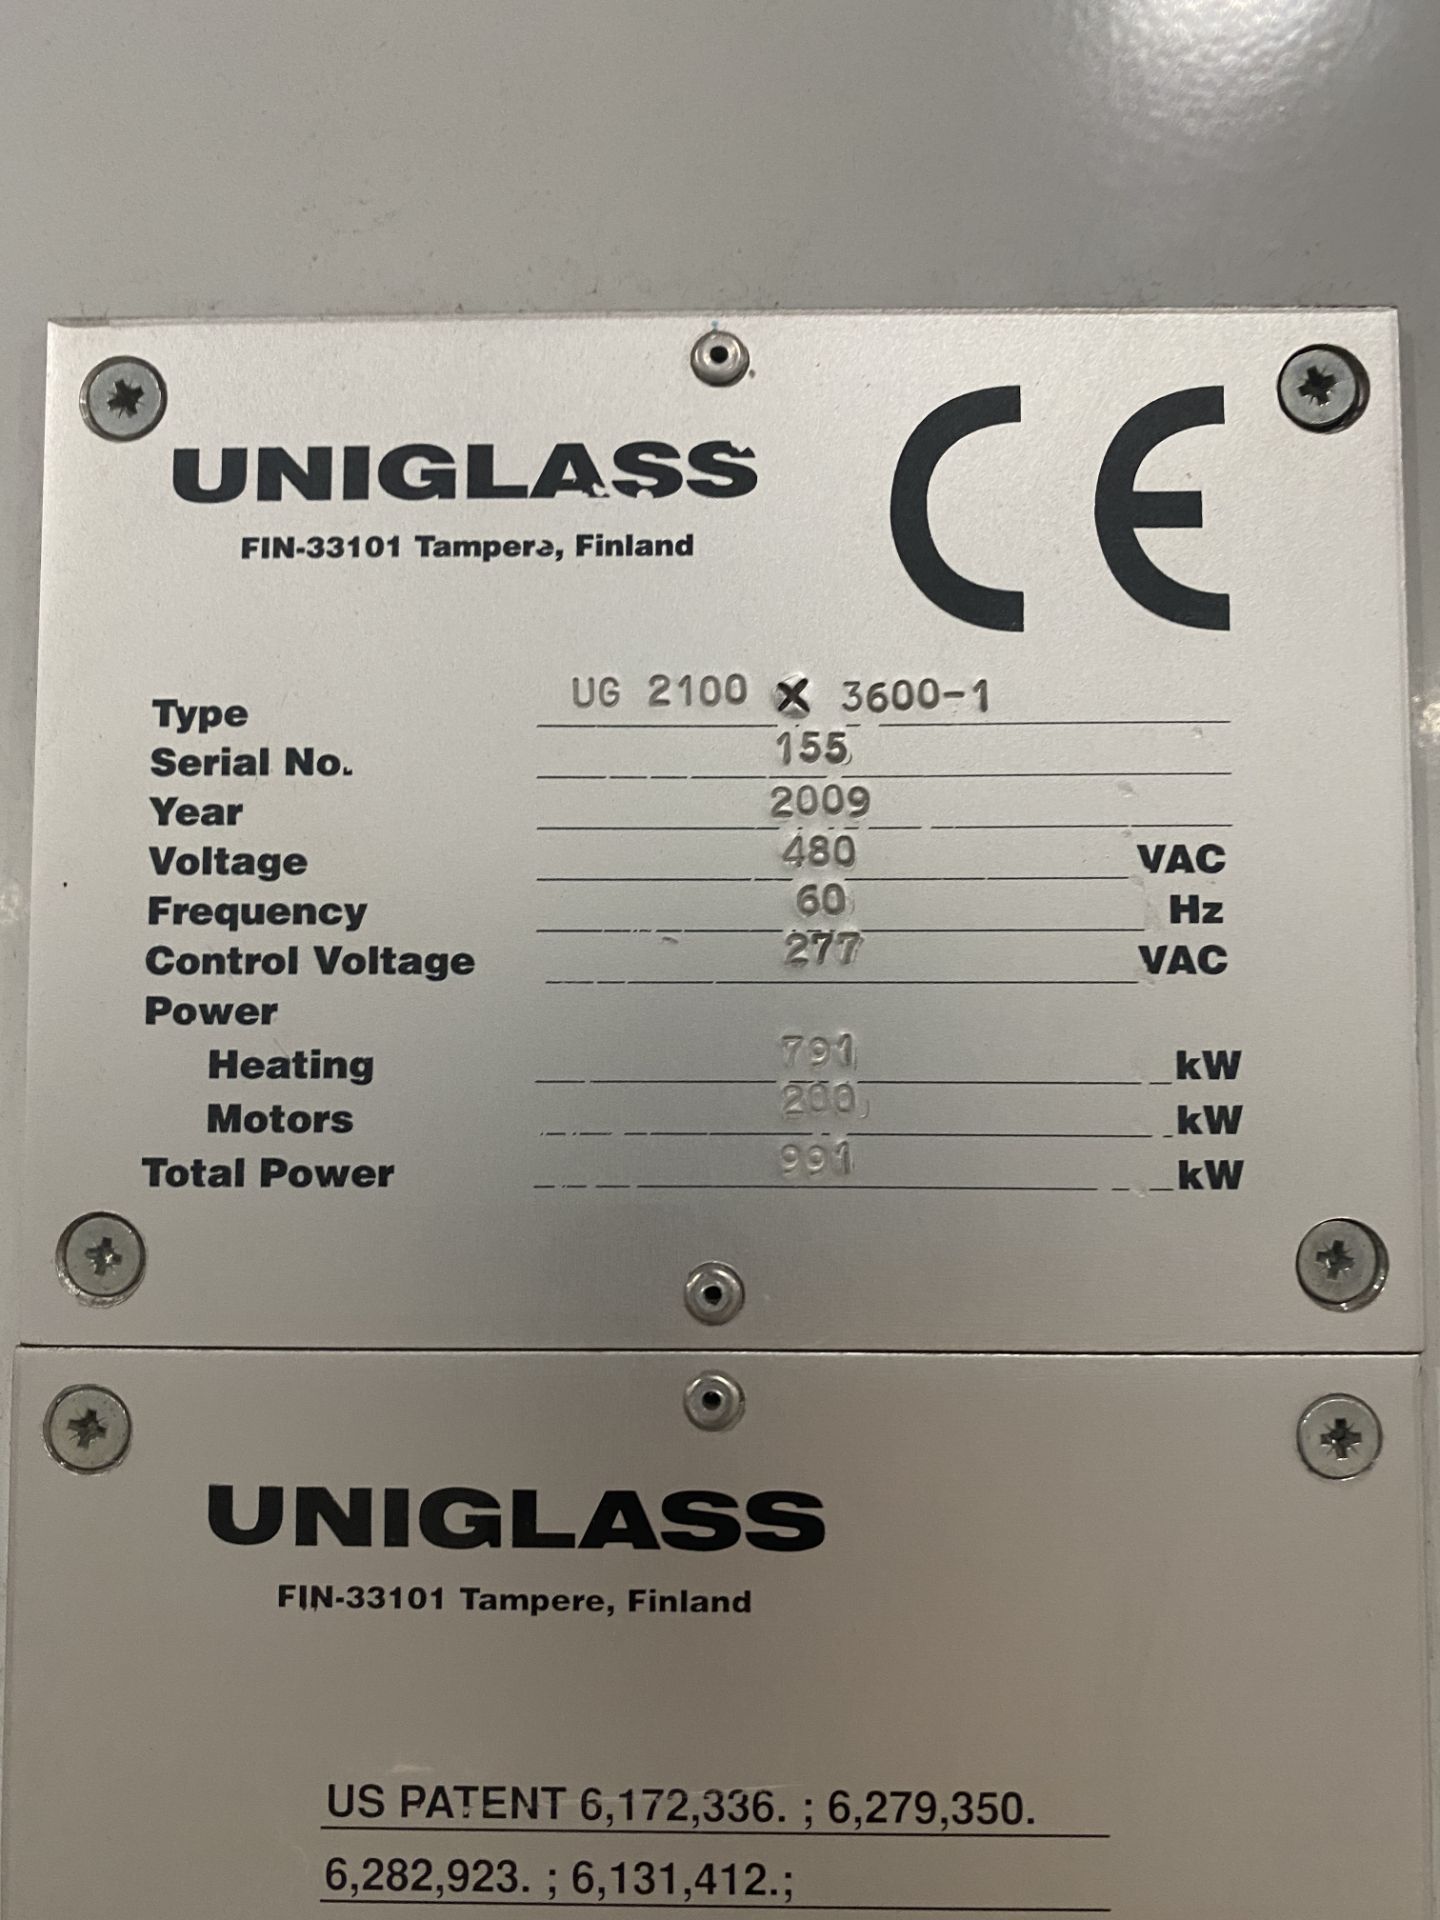 2009 Uniglass UGC-2100 x 3600-1 Glass Tempering Furnace, 791 KW Heating, Drives, Blower Motors - Image 22 of 23